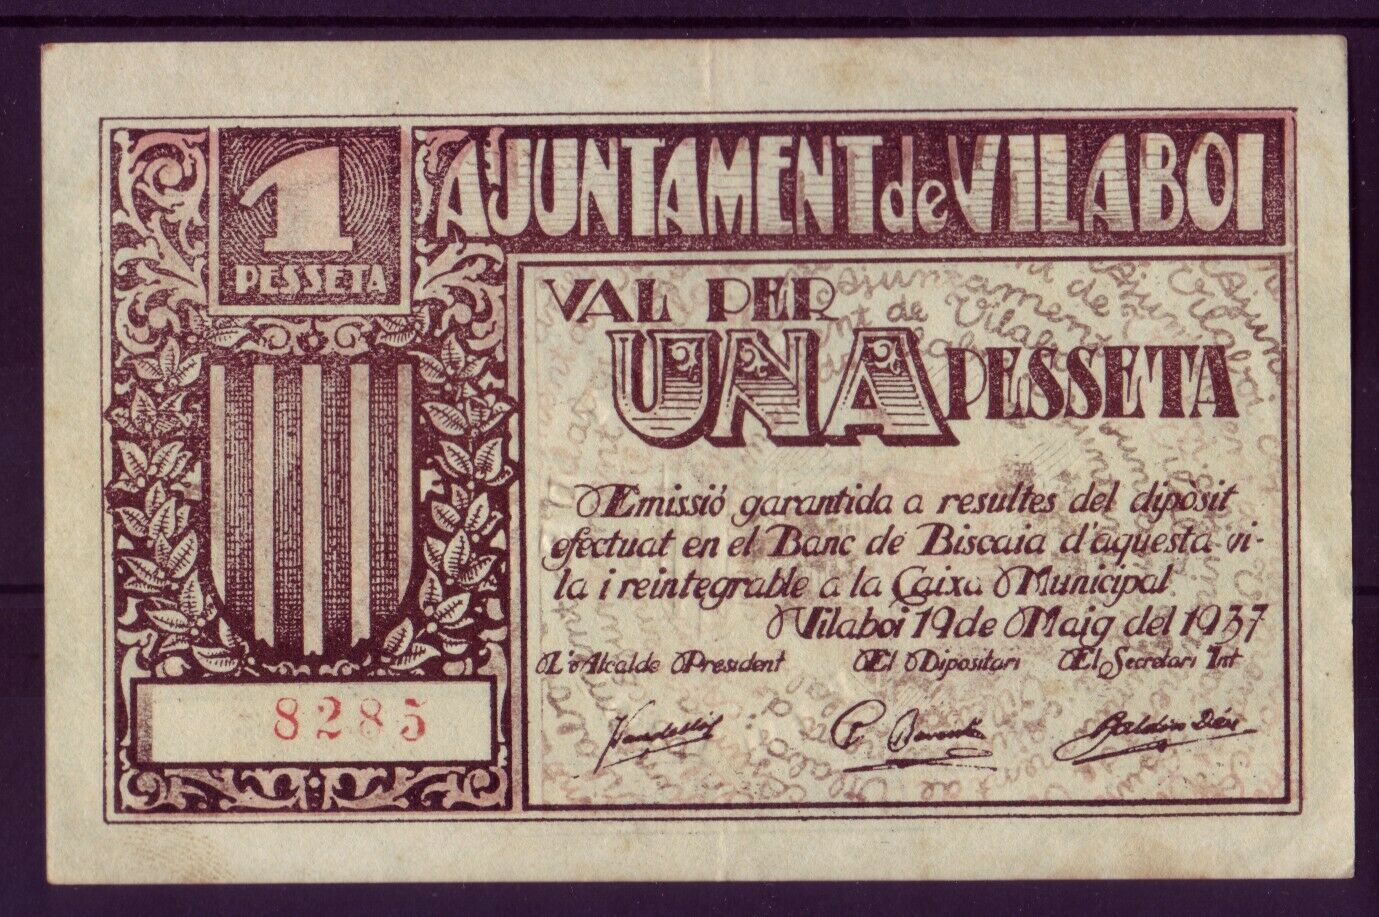 LOCAL BANKNOTE - VILABOI - 1 PESETA YEAR 1937                              BILL0043b_VILABOI